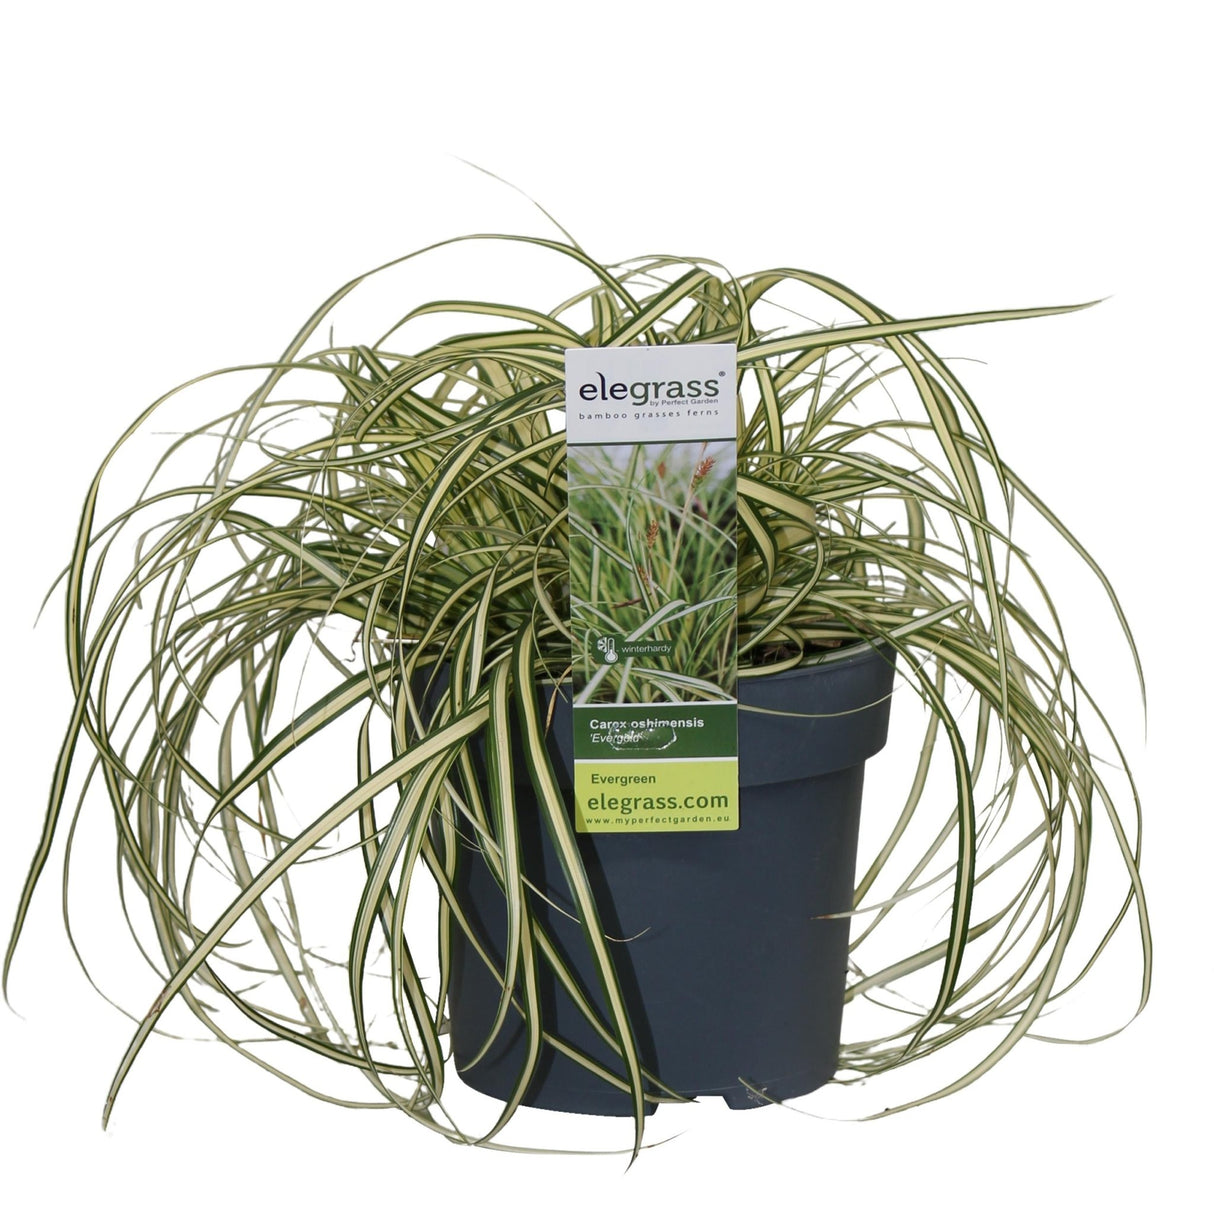 Livraison plante Carex hachijoensis 'Evergold'